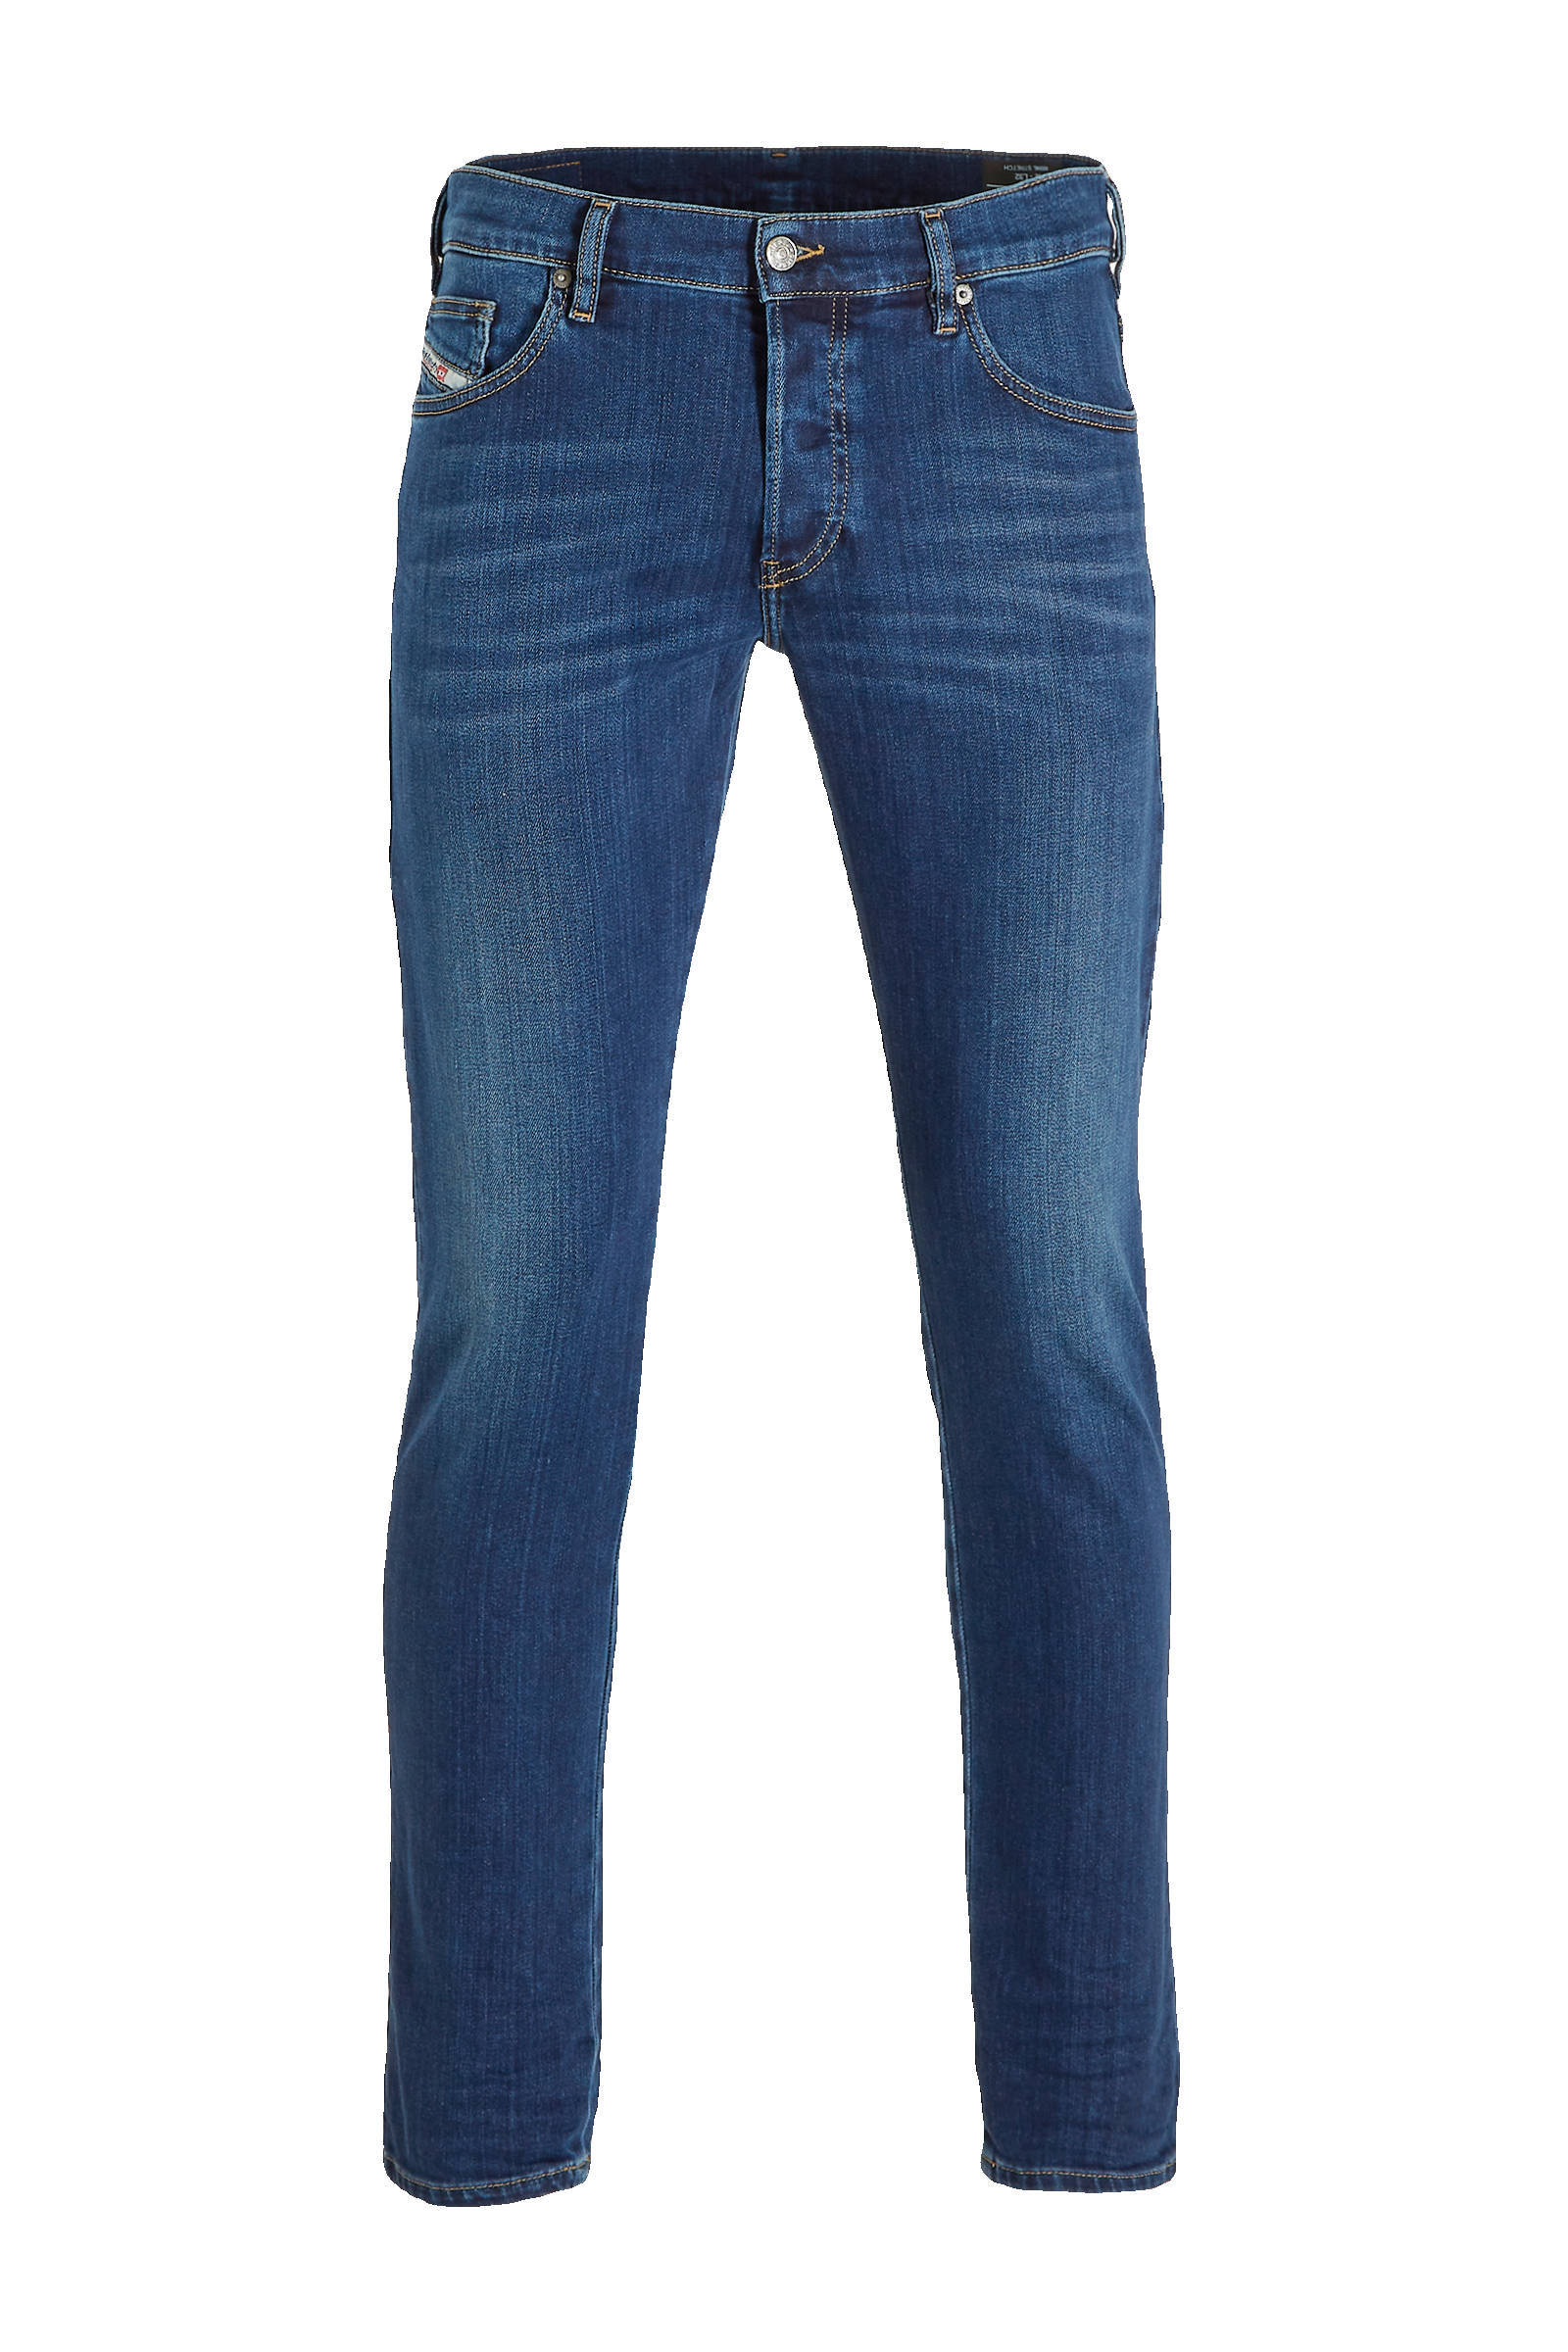 Diesel tapered fit jeans D Yennox 01 dark blue online kopen